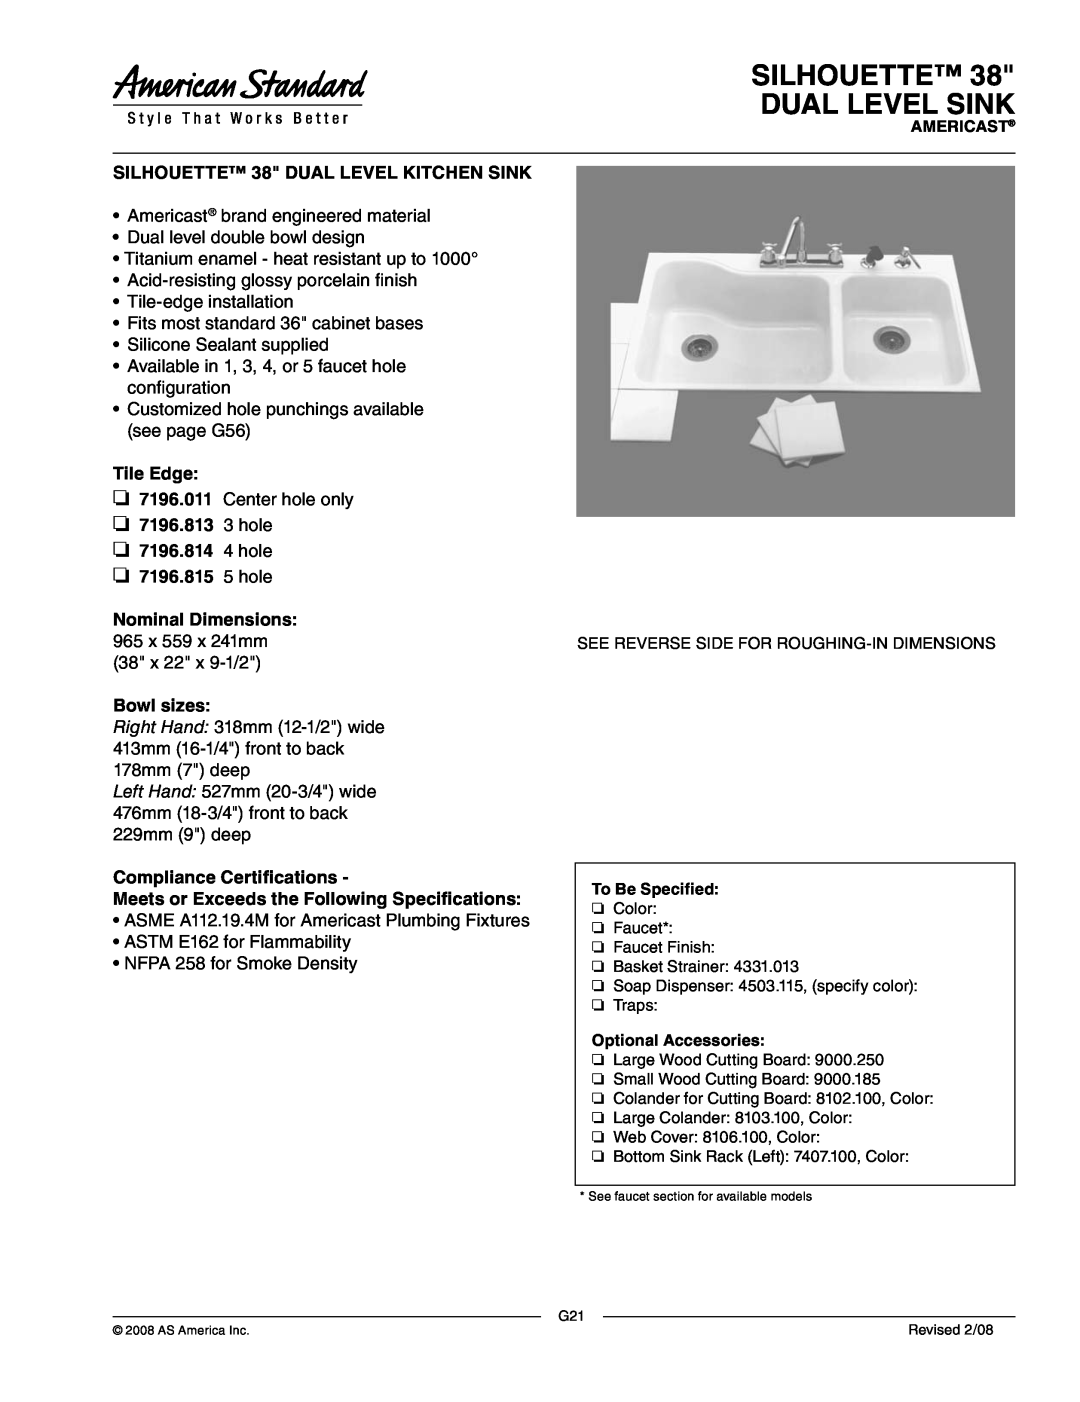 American Standard 7196.813 dimensions Silhouette Dual Level Sink, SILHOUETTE 38 DUAL LEVEL KITCHEN SINK, Tile Edge 